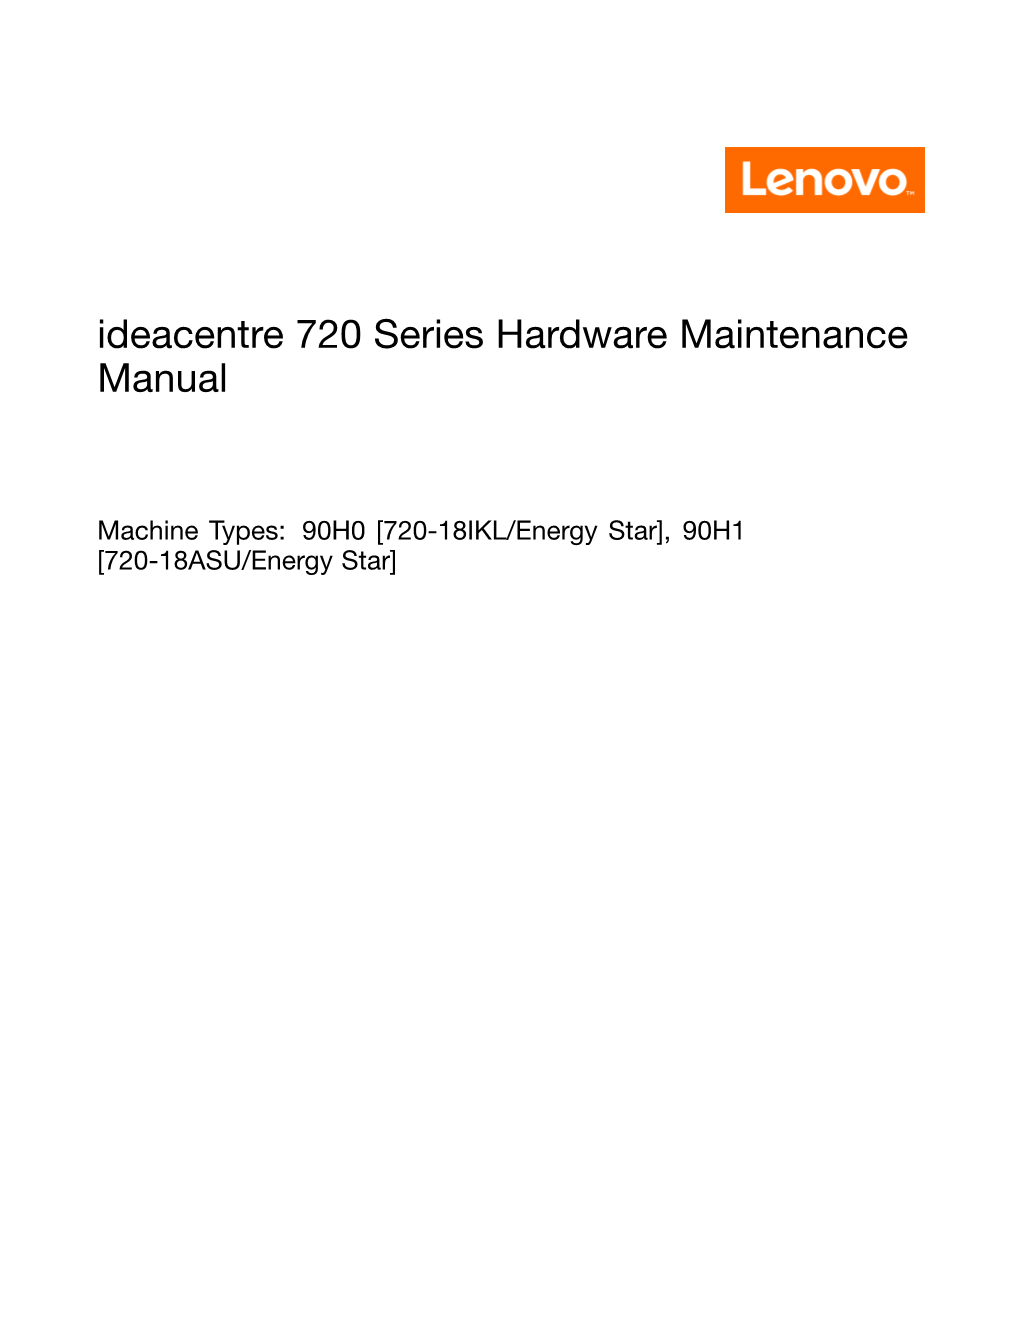 Ideacentre 720 Series Hardware Maintenance Manual